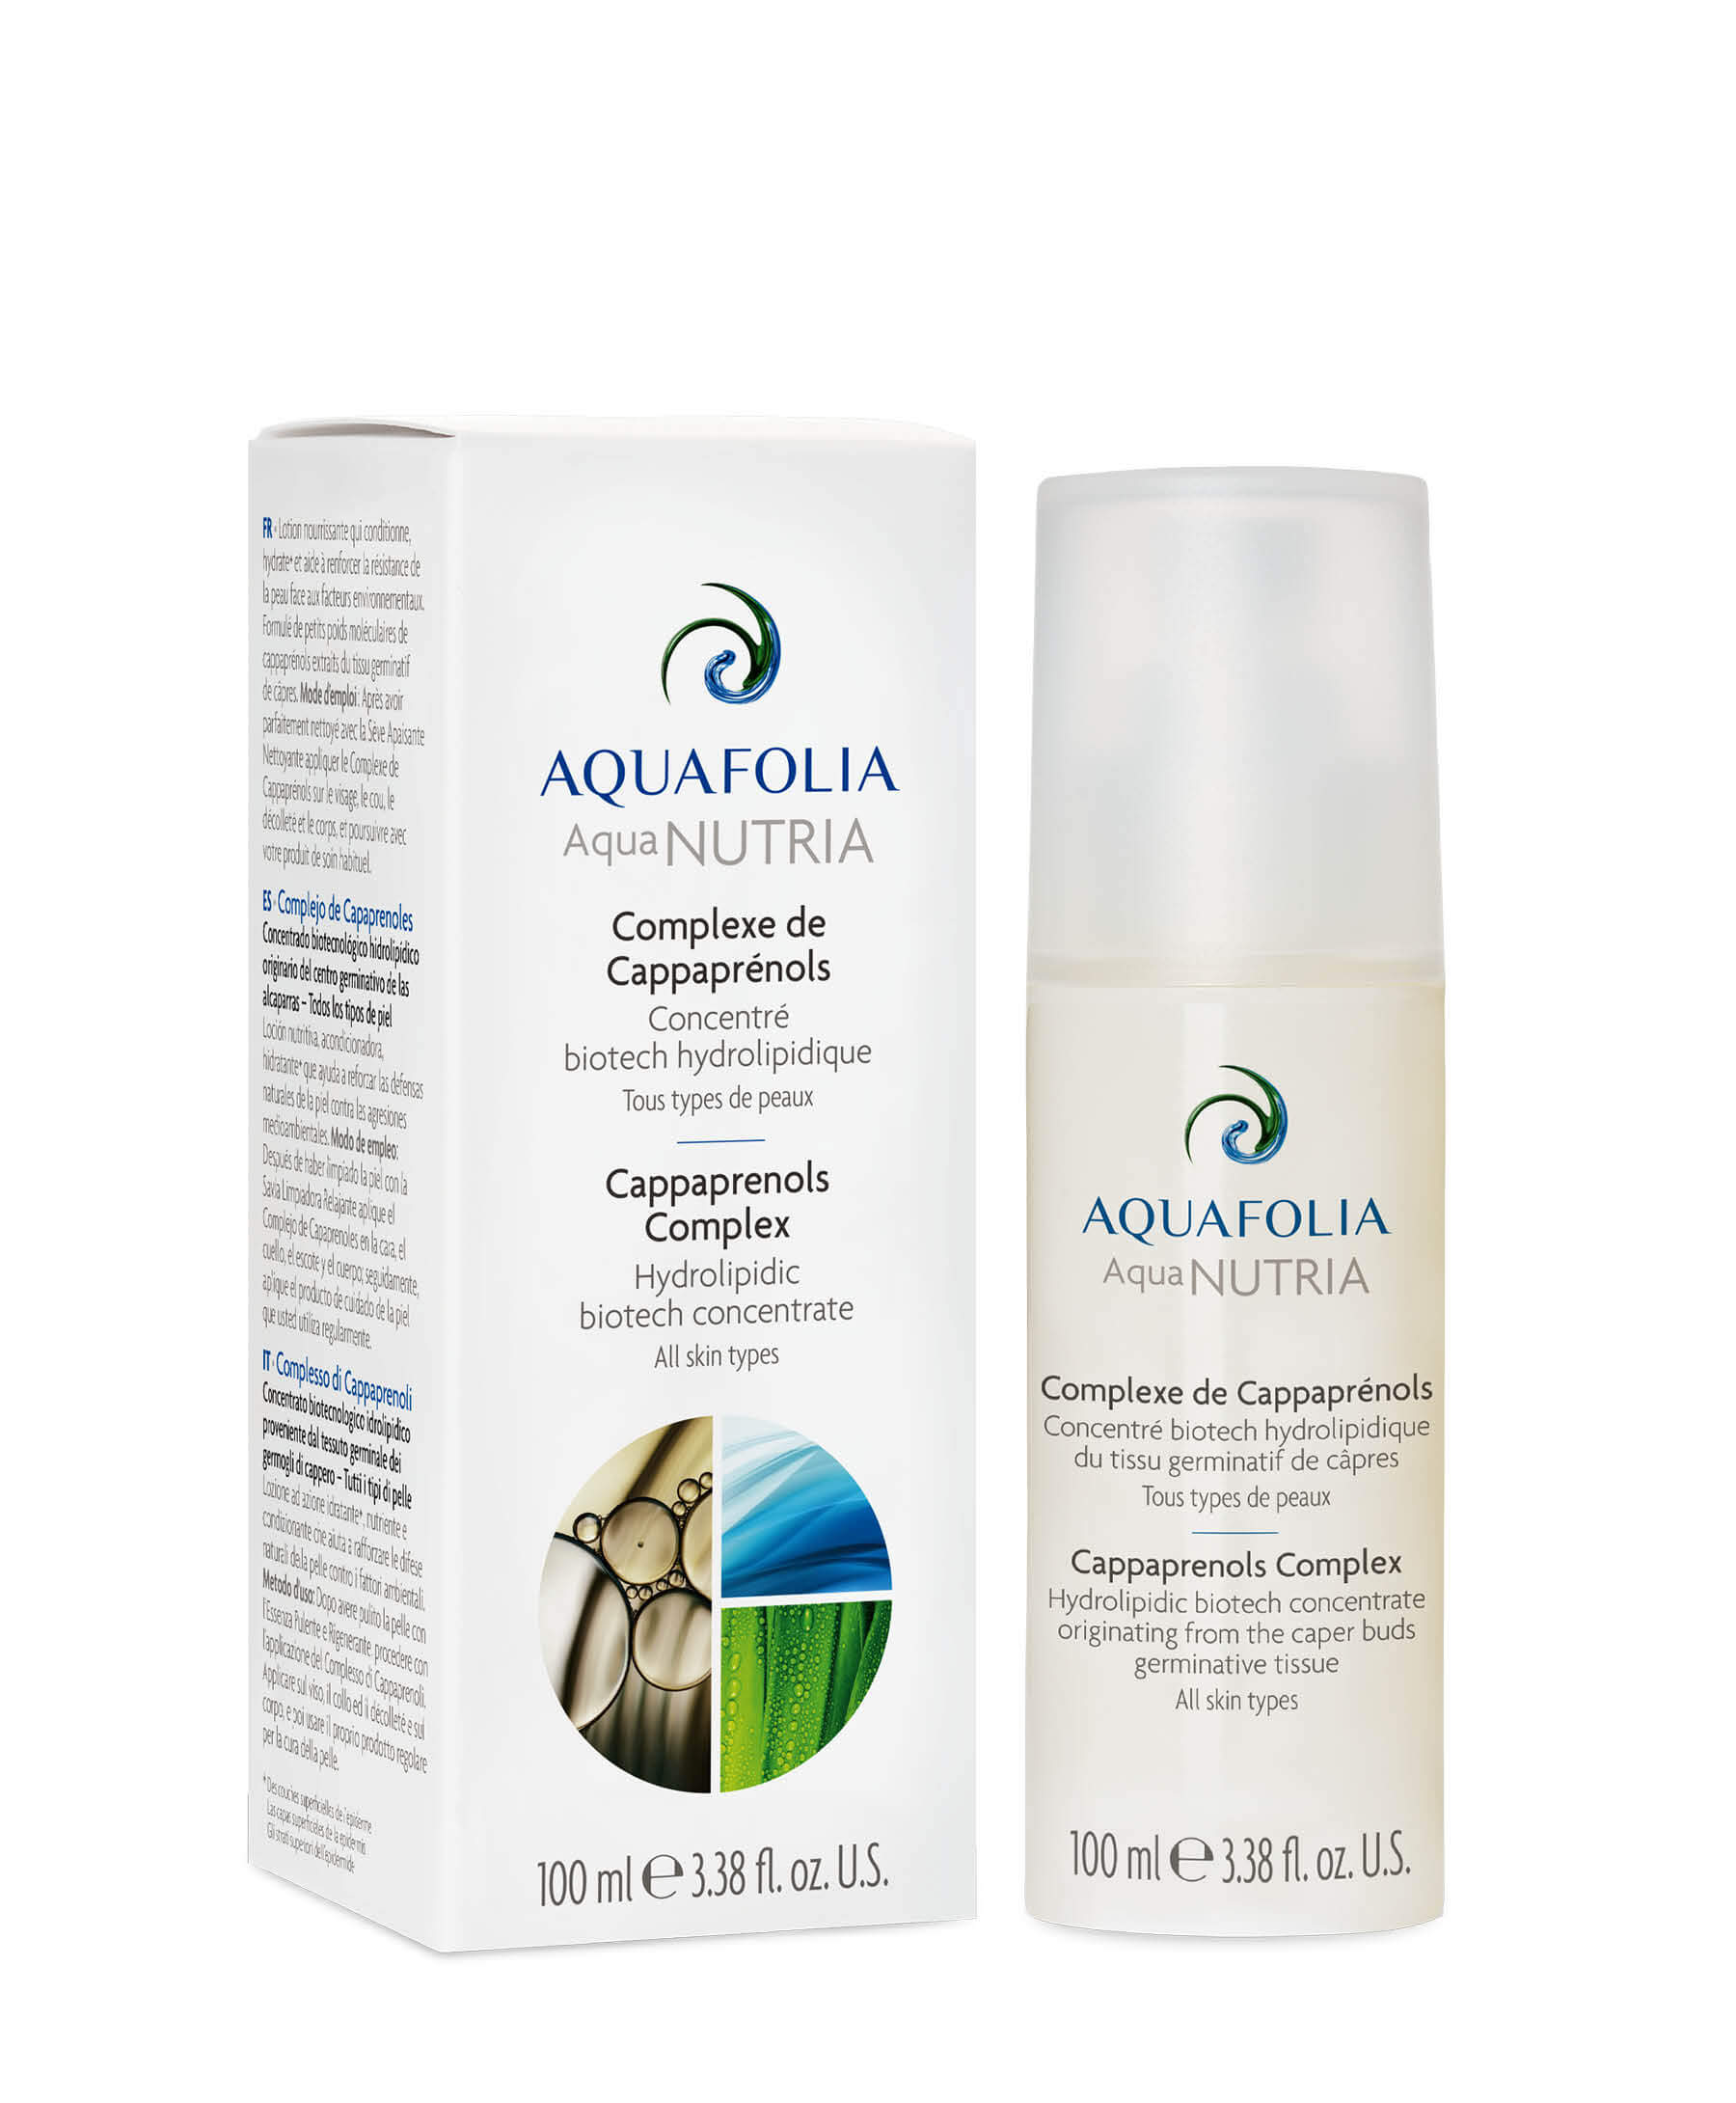 Aquafolia cappprenols complex hydrolipidic biotech concentrate 100ml, lipid regeneration, dehydrated skin, Product image, box, bottle, white background